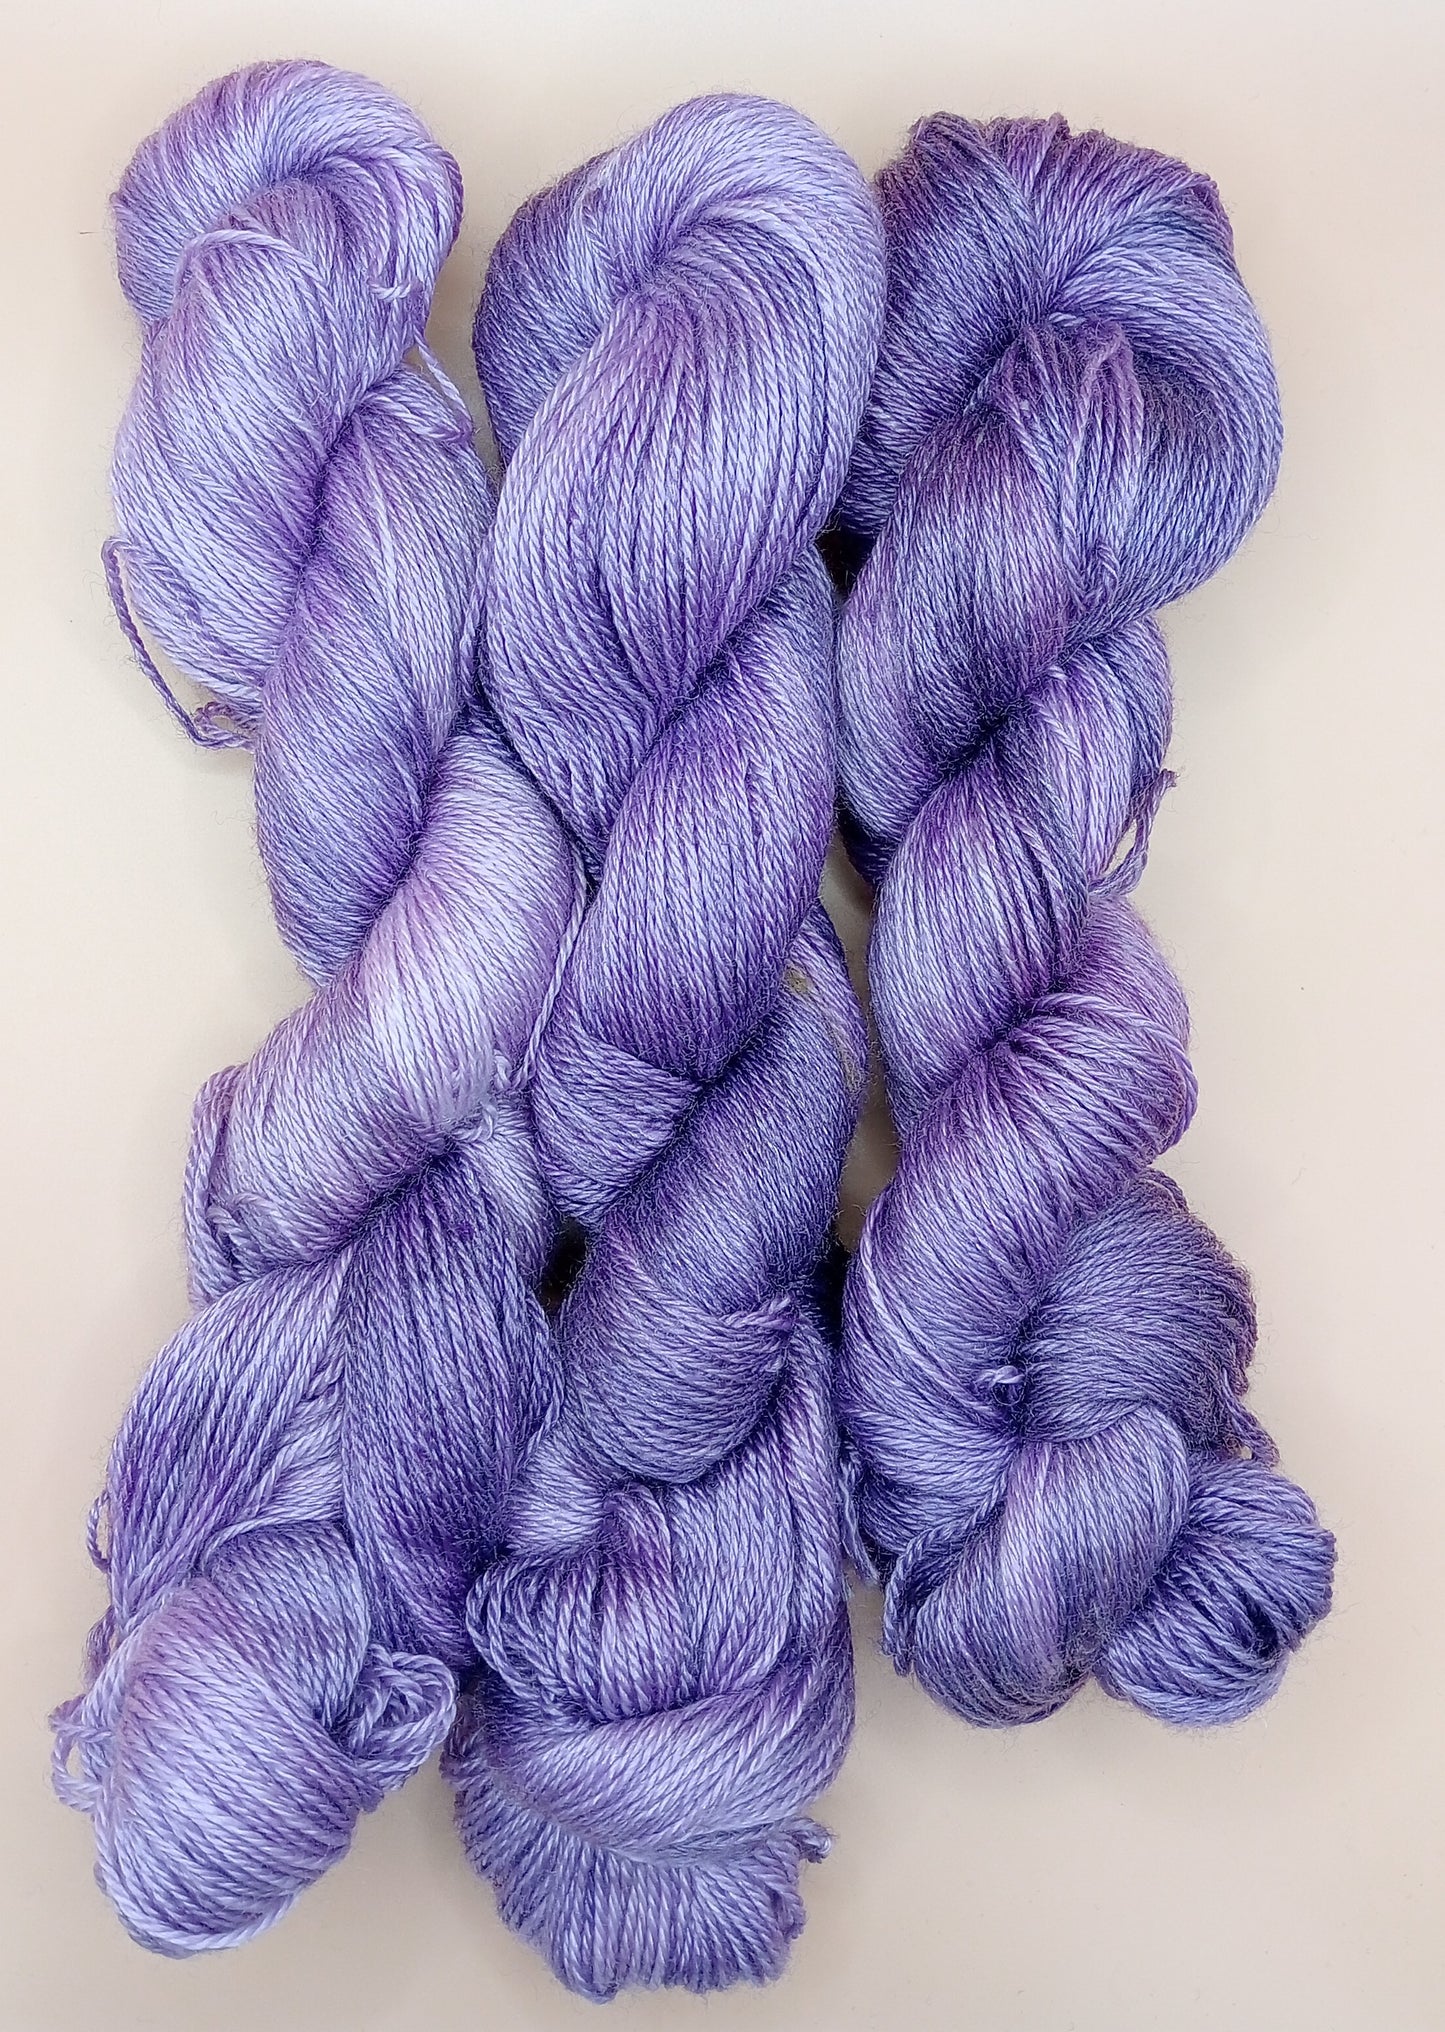 100G Merino/Tencel hand dyed luxury Yarn 4 Ply- "Violet Whisper"